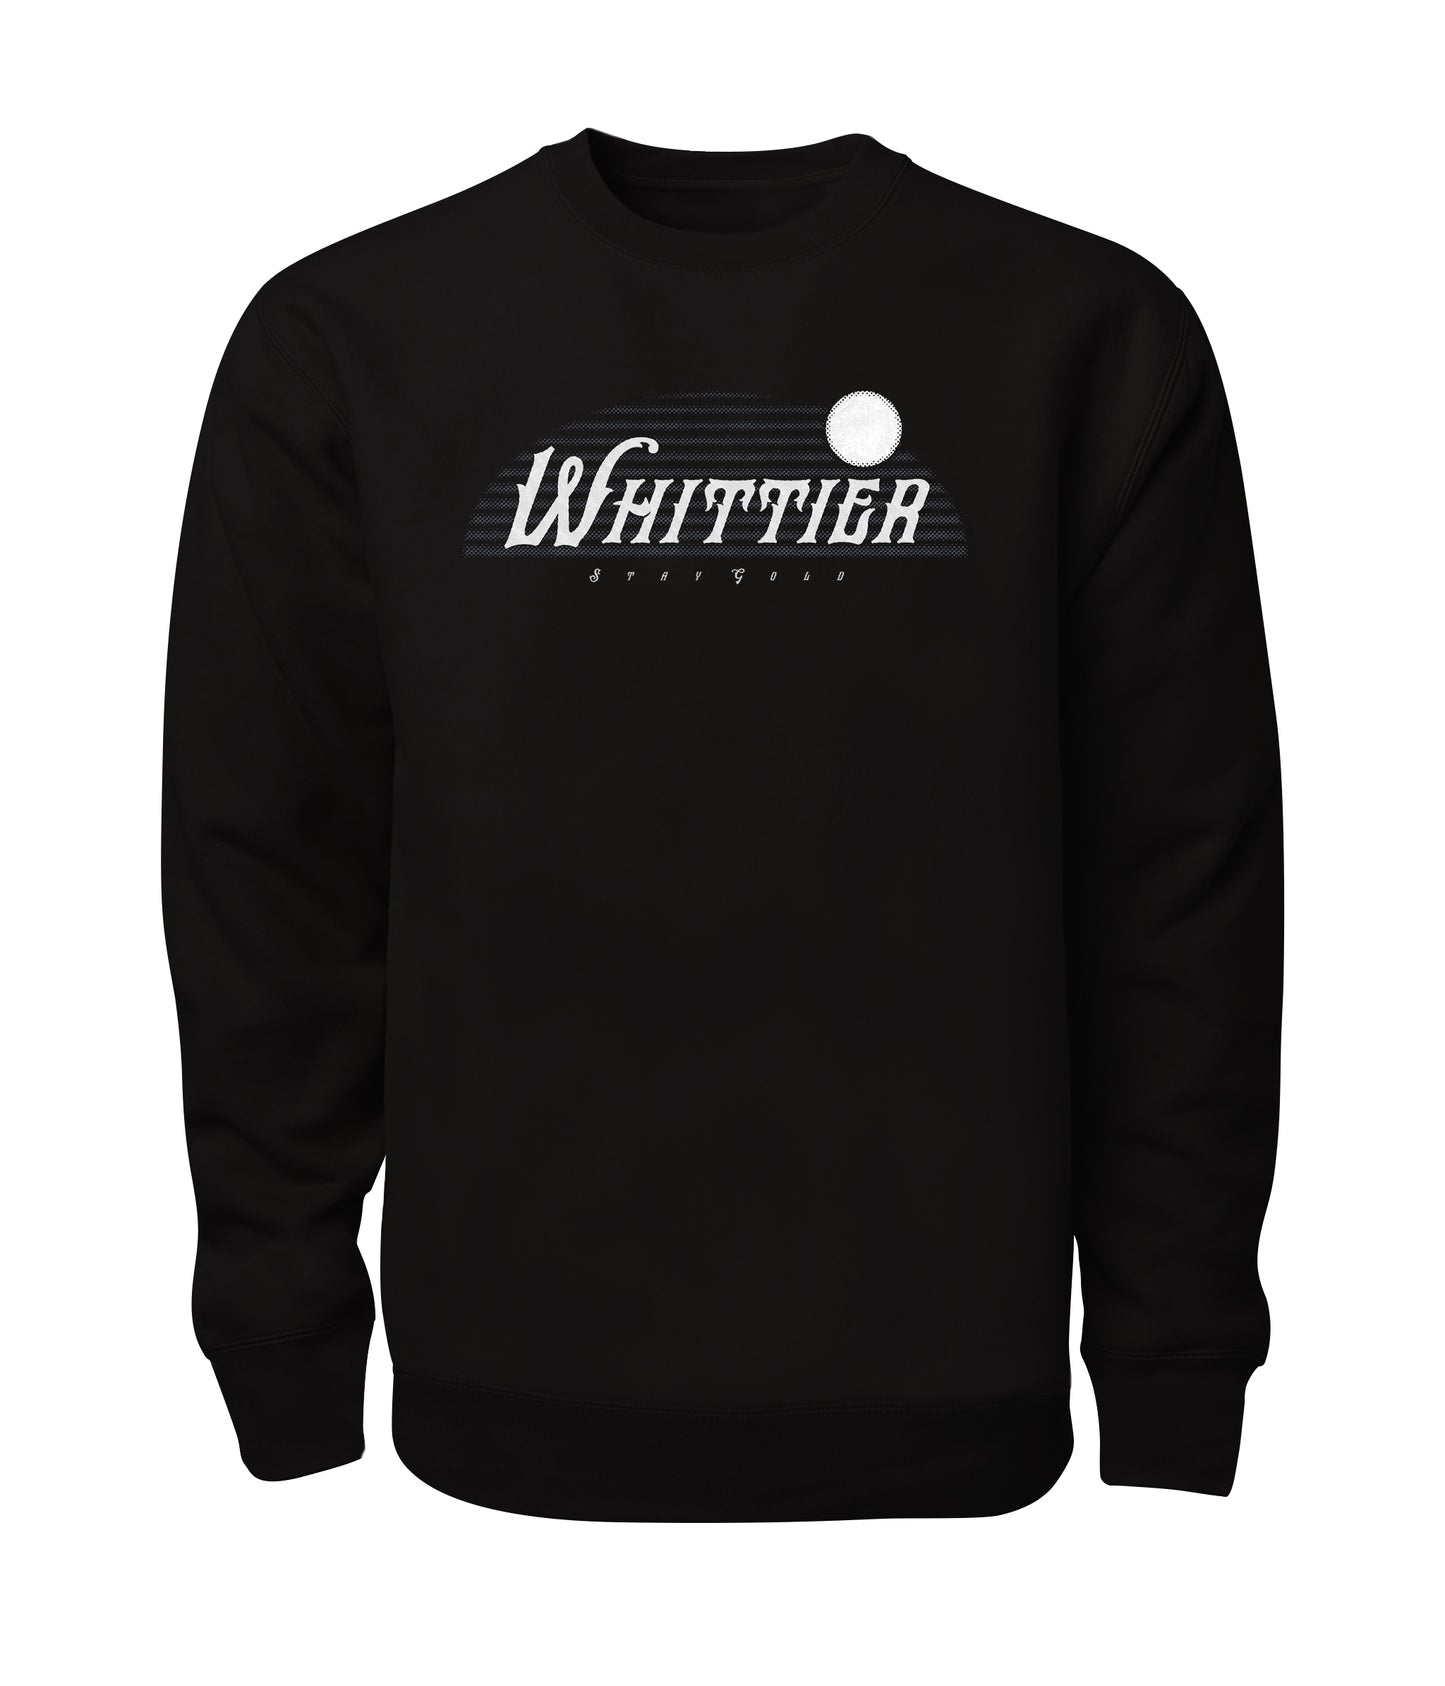 Whittier Stay Gold Crewneck Sweatshirt